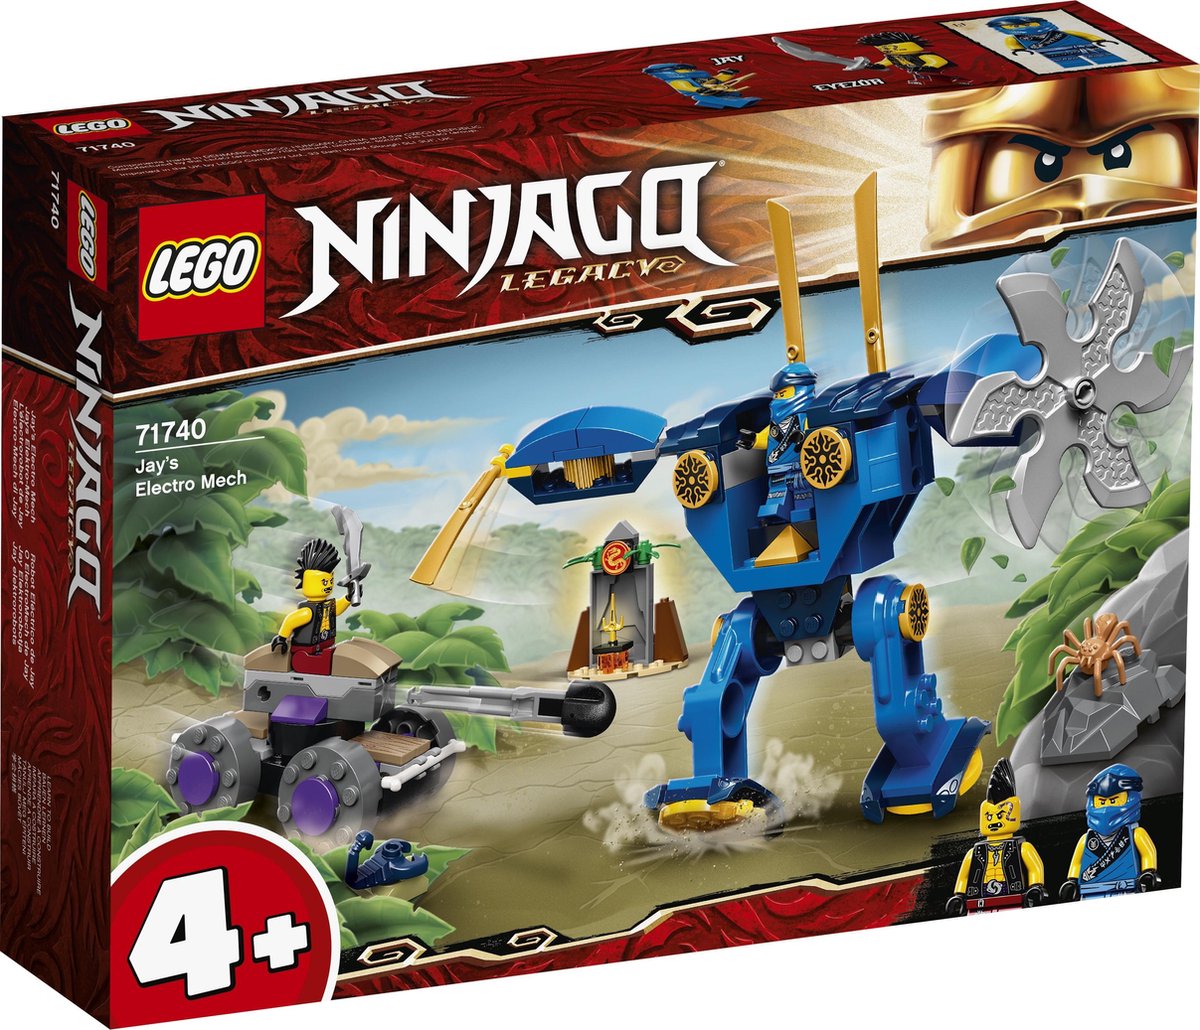 LEGO NINJAGO Legacy 4+ Jays Electro Mecha - 71740